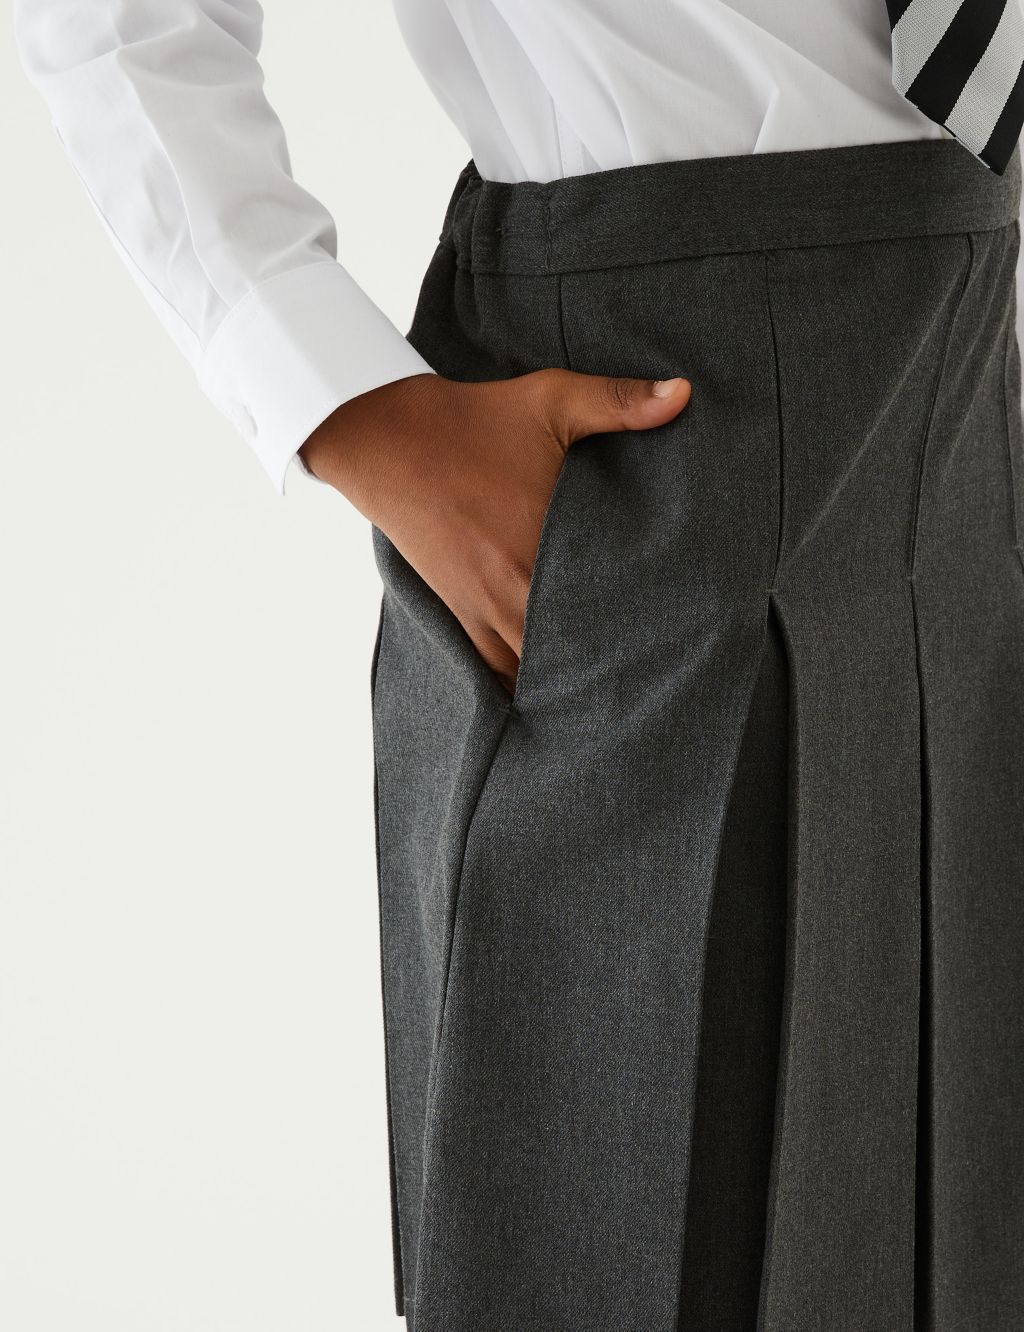 Girls' Plus Fit Permanent Pleats School Skirt (2-18 Yrs) image 2